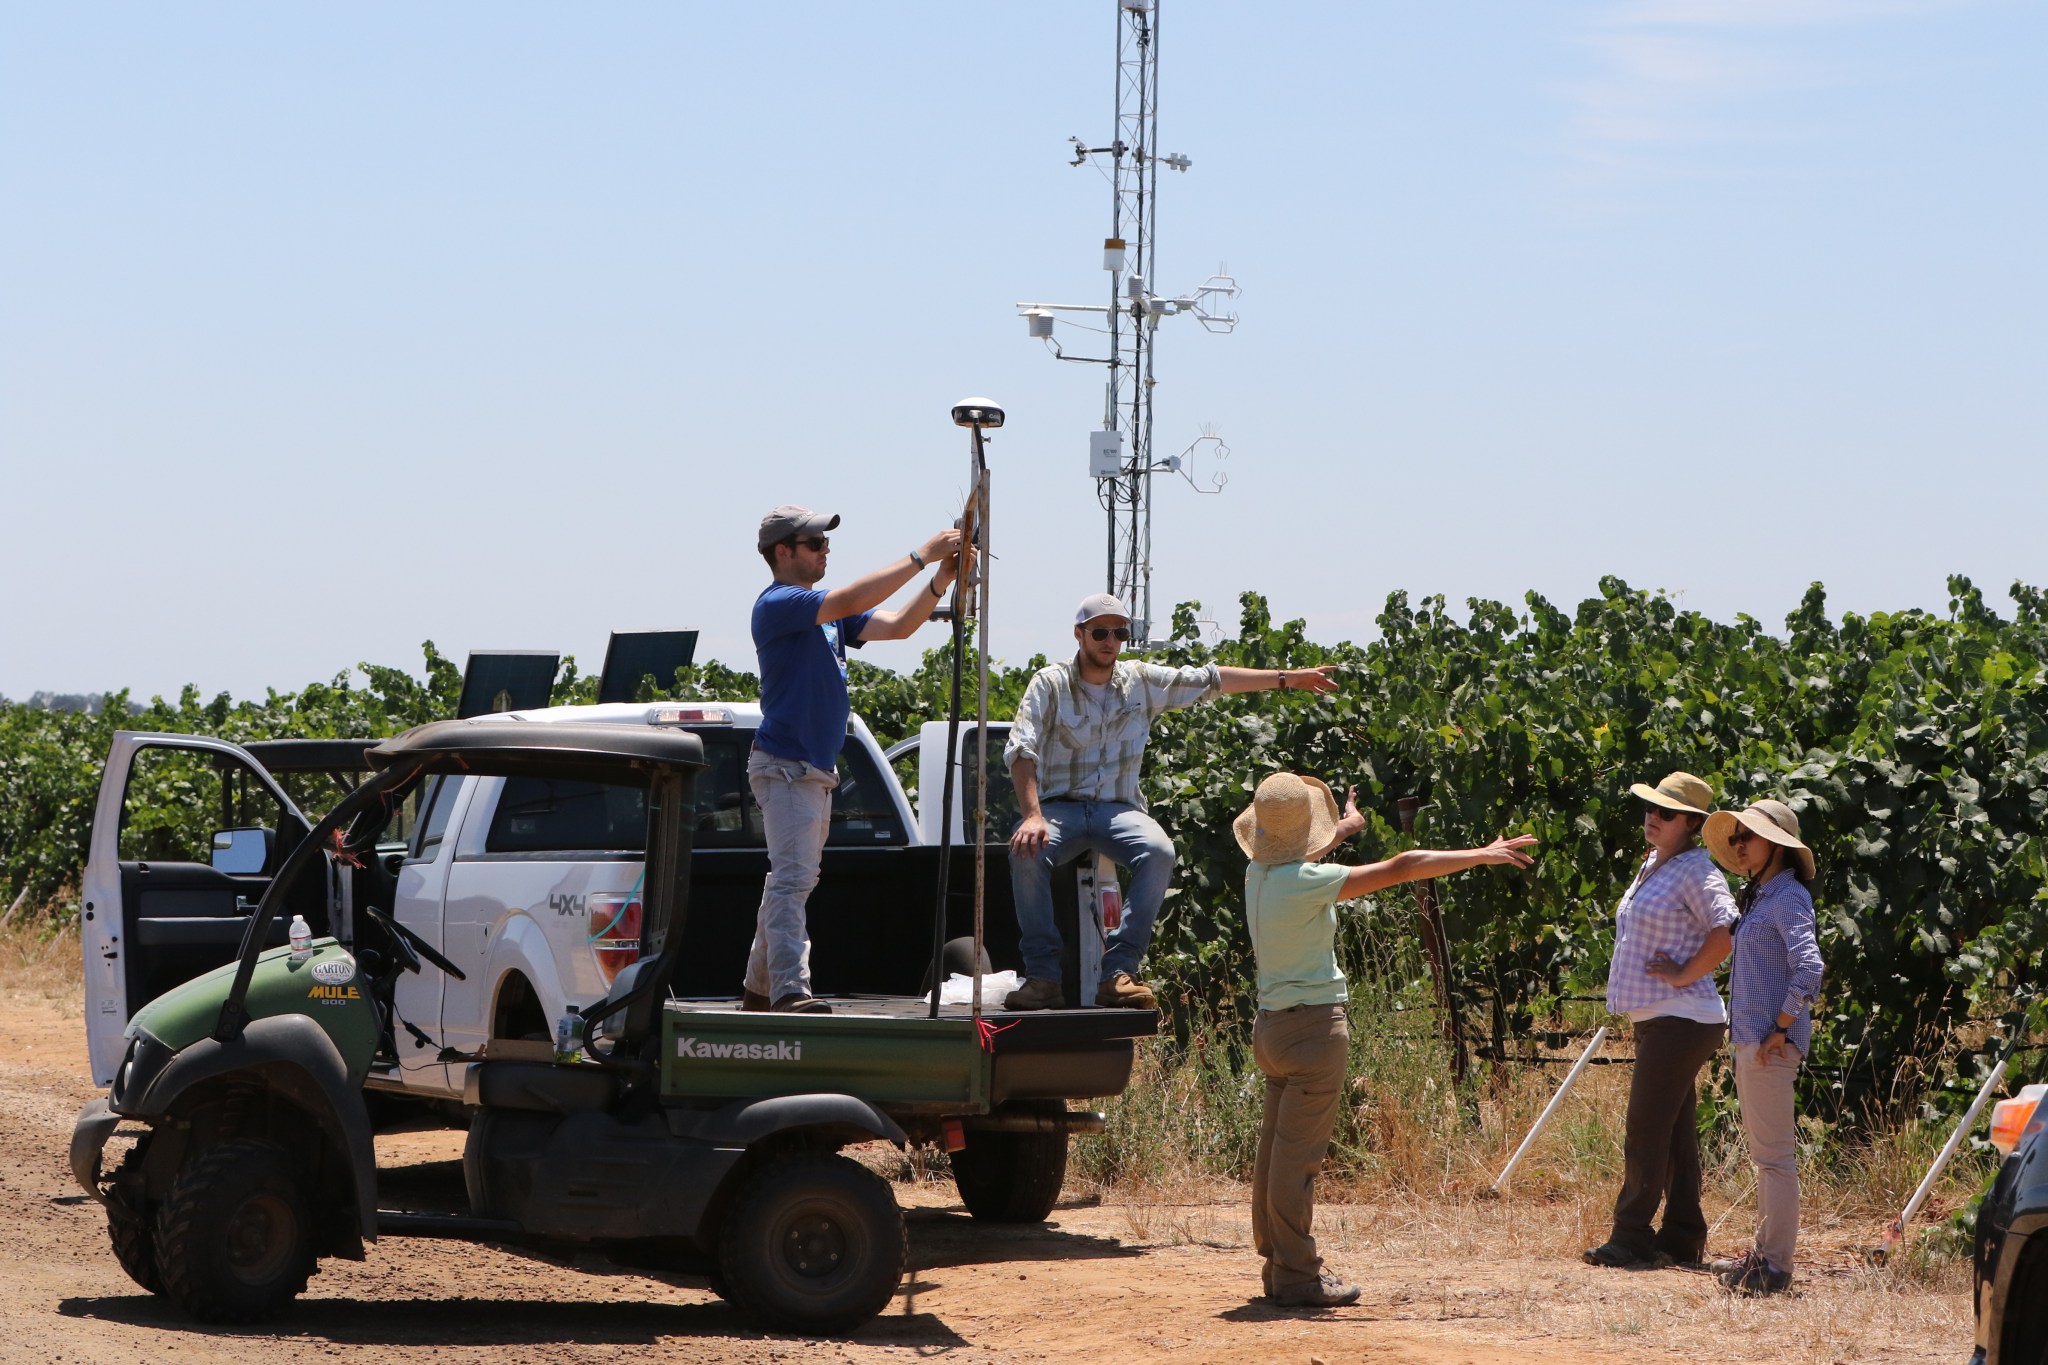 5 EJ Gallo team members setting up scientific instruments in a California vineyard